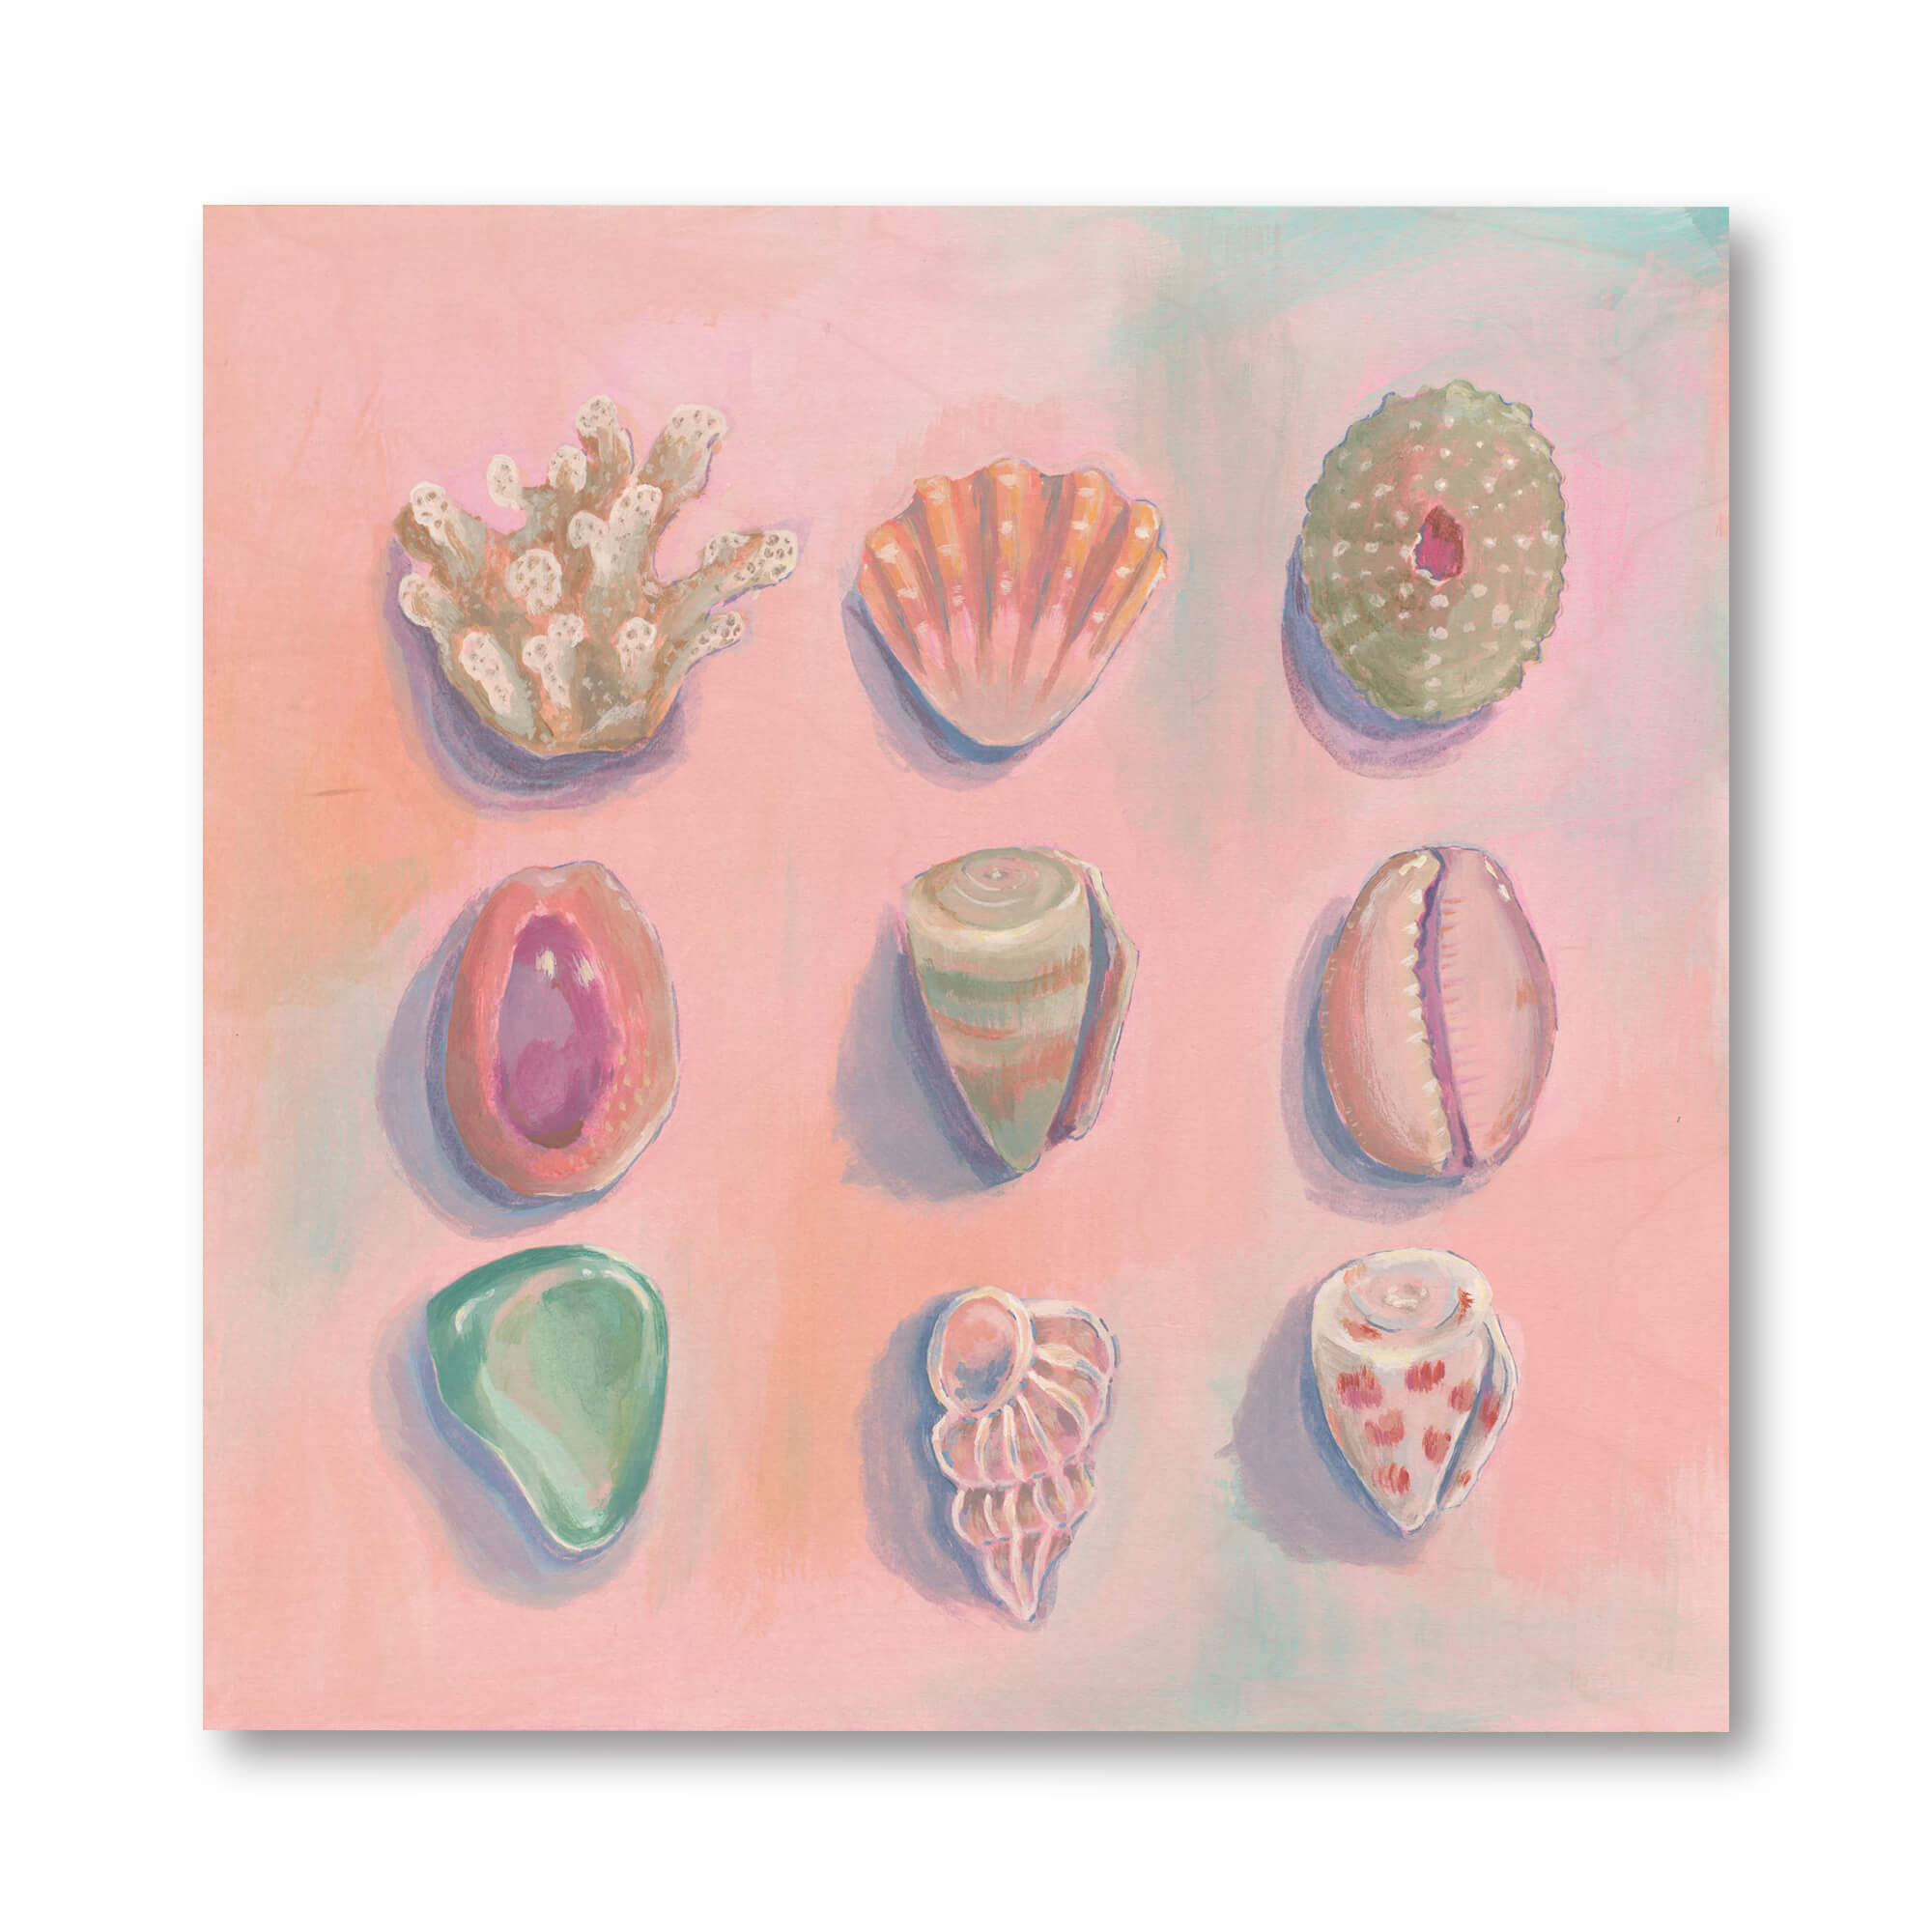 Light pink hued seashells by Hawaii artist Lindsay Wilkins